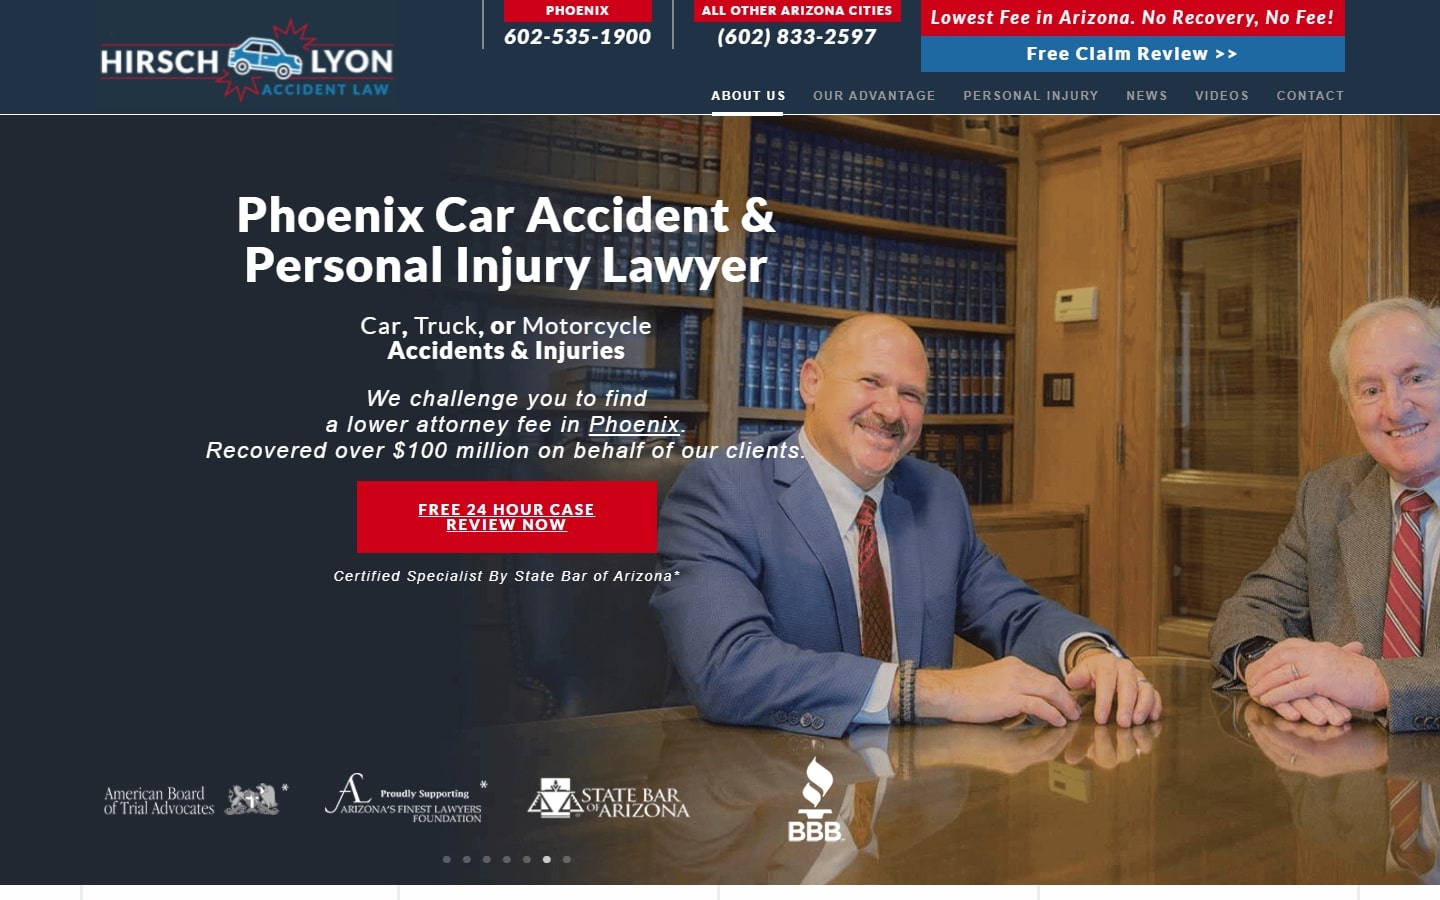 Hirsch Lyon Accident Law